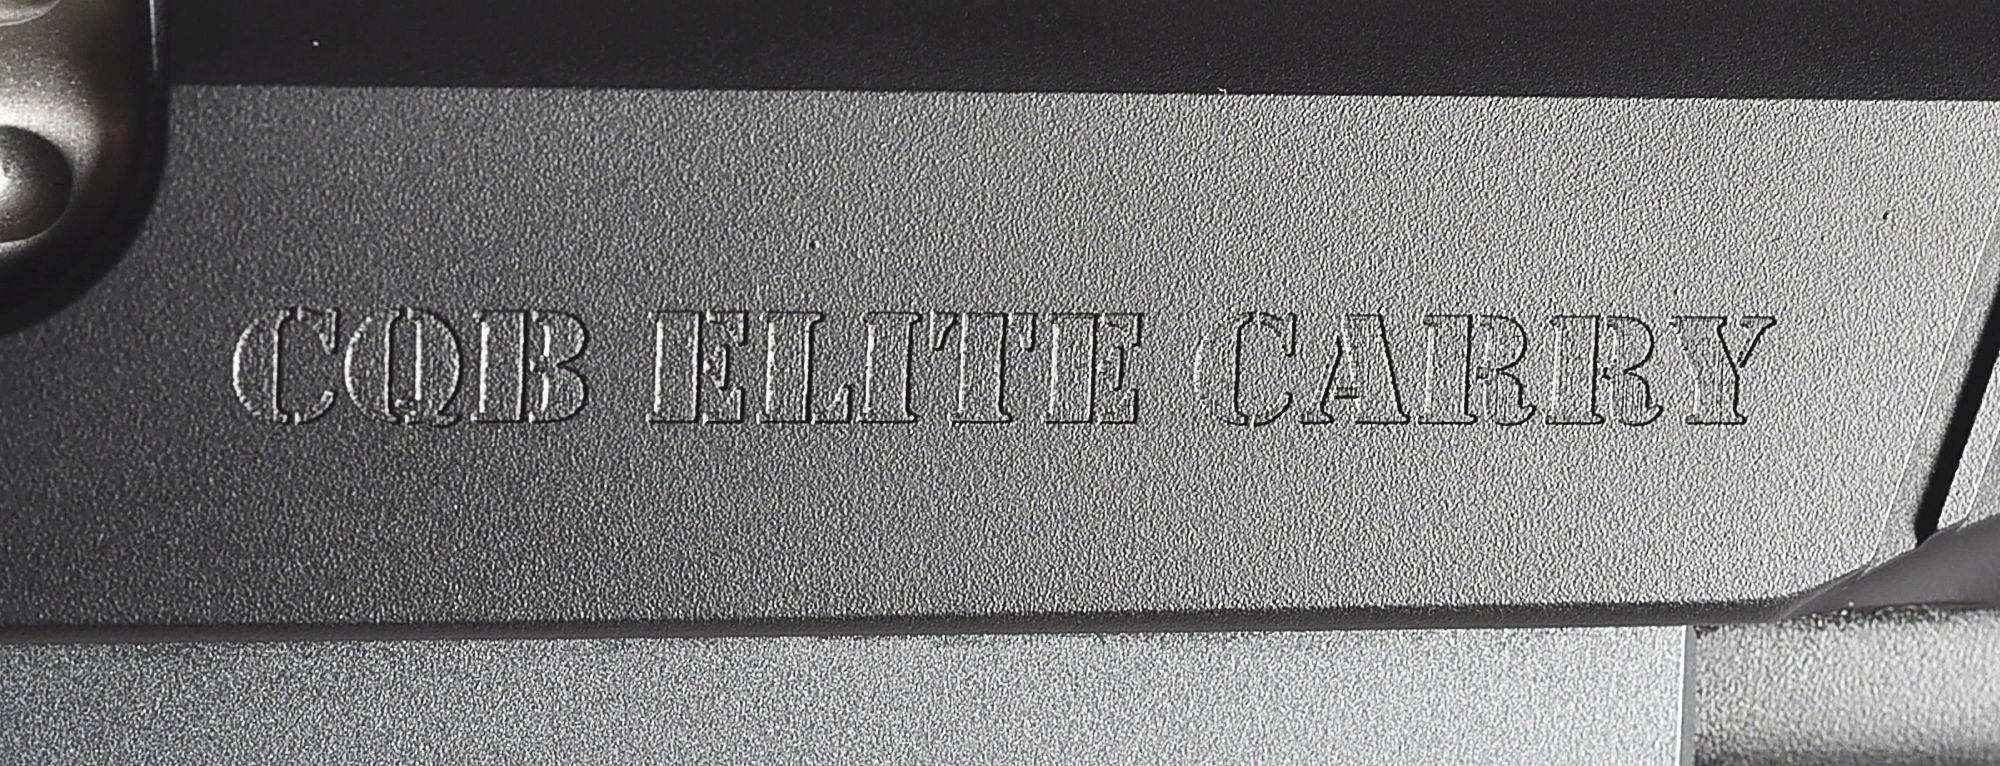 (M) WILSON COMBAT CQB ELITE CARRY 9MM SEMI-AUTOMATIC PISTOL WITH CASE.